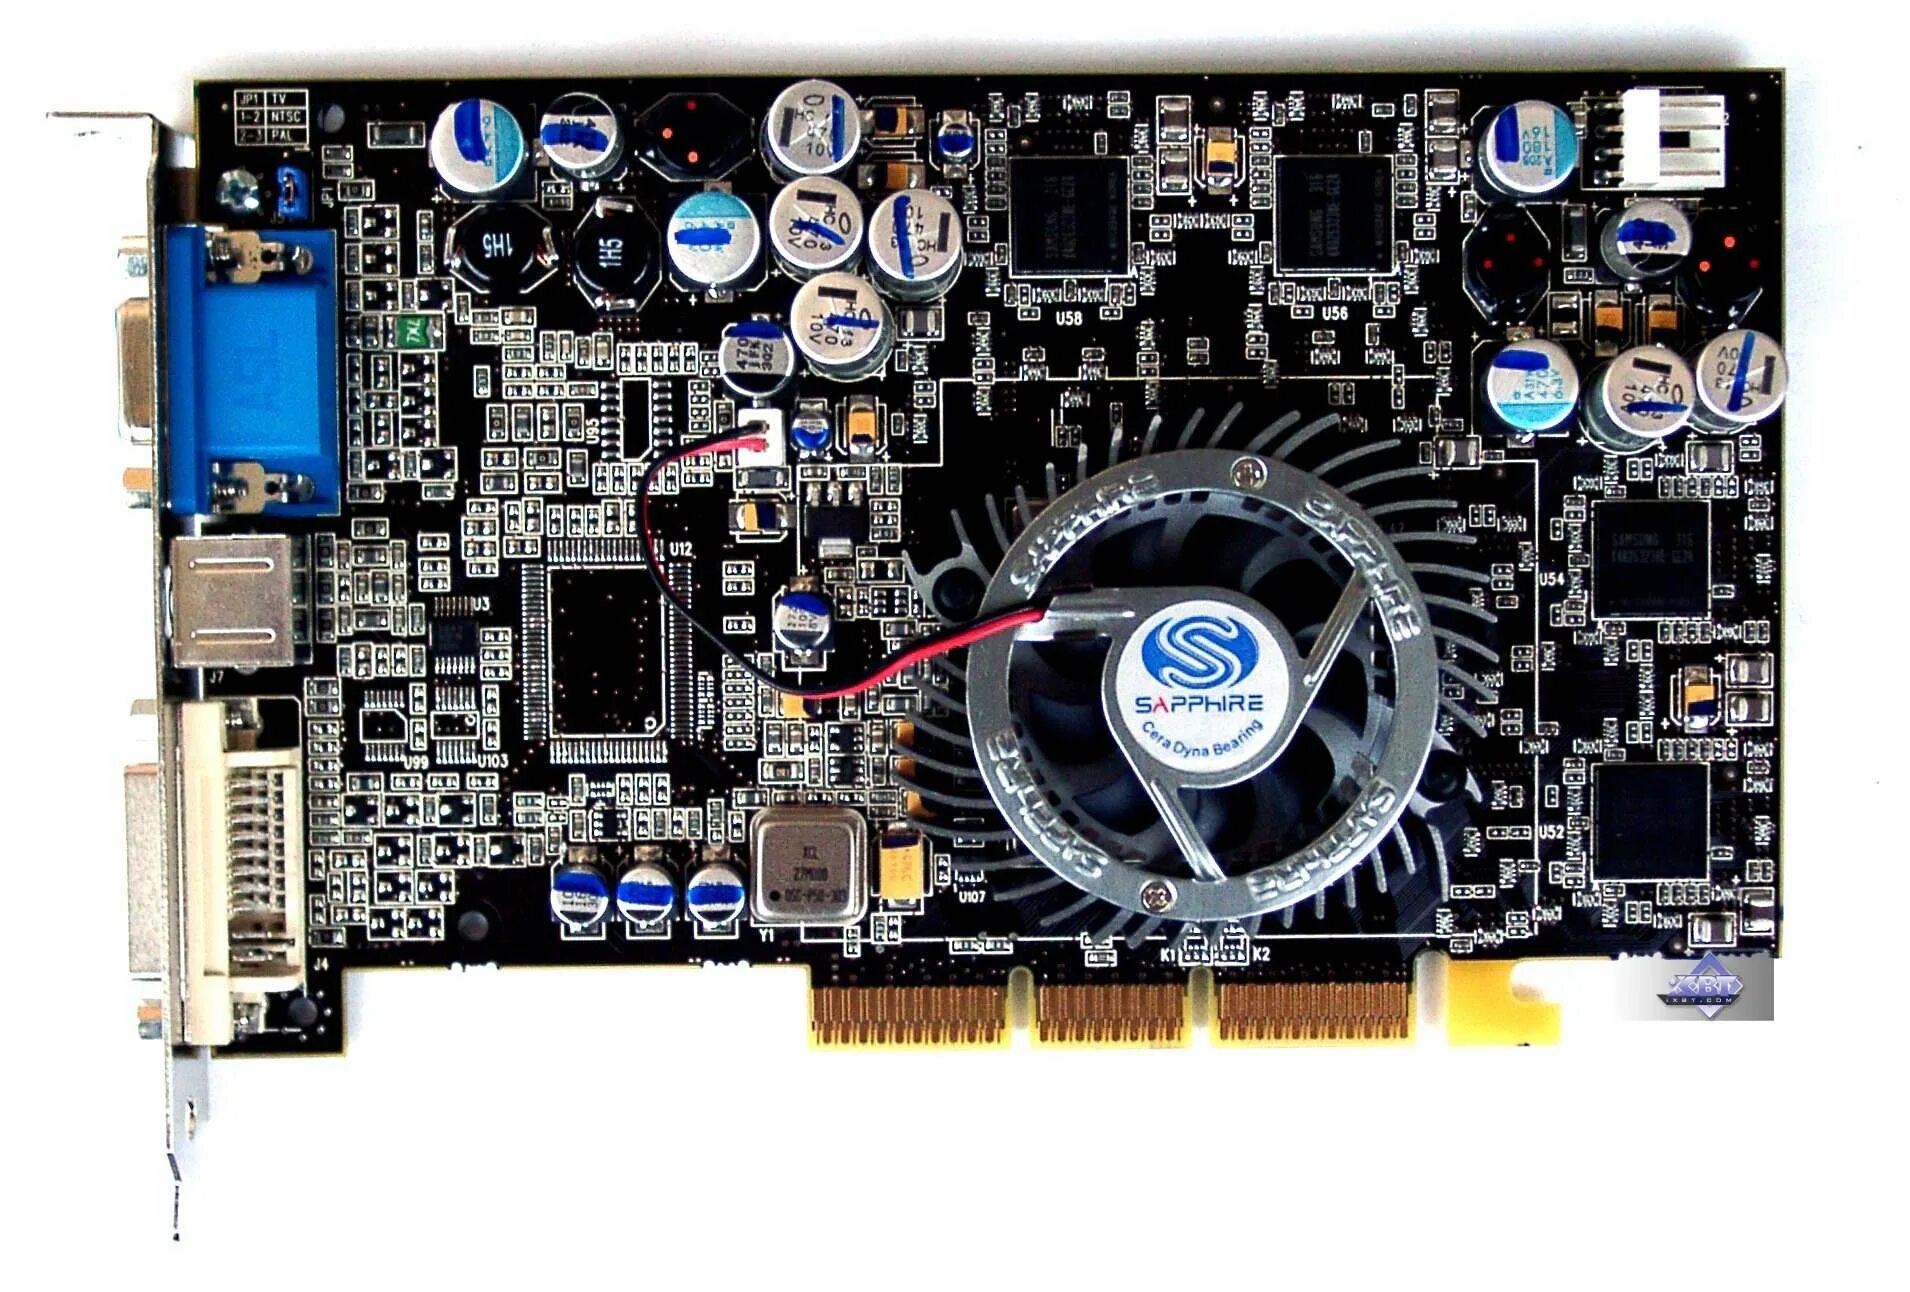 Sapphire Radeon 9800 Pro. 9800 Pro AGP. Видеокарта 9800 AGP. Видеокарта ATI Radeon 9800 Pro. Сапфир драйверы